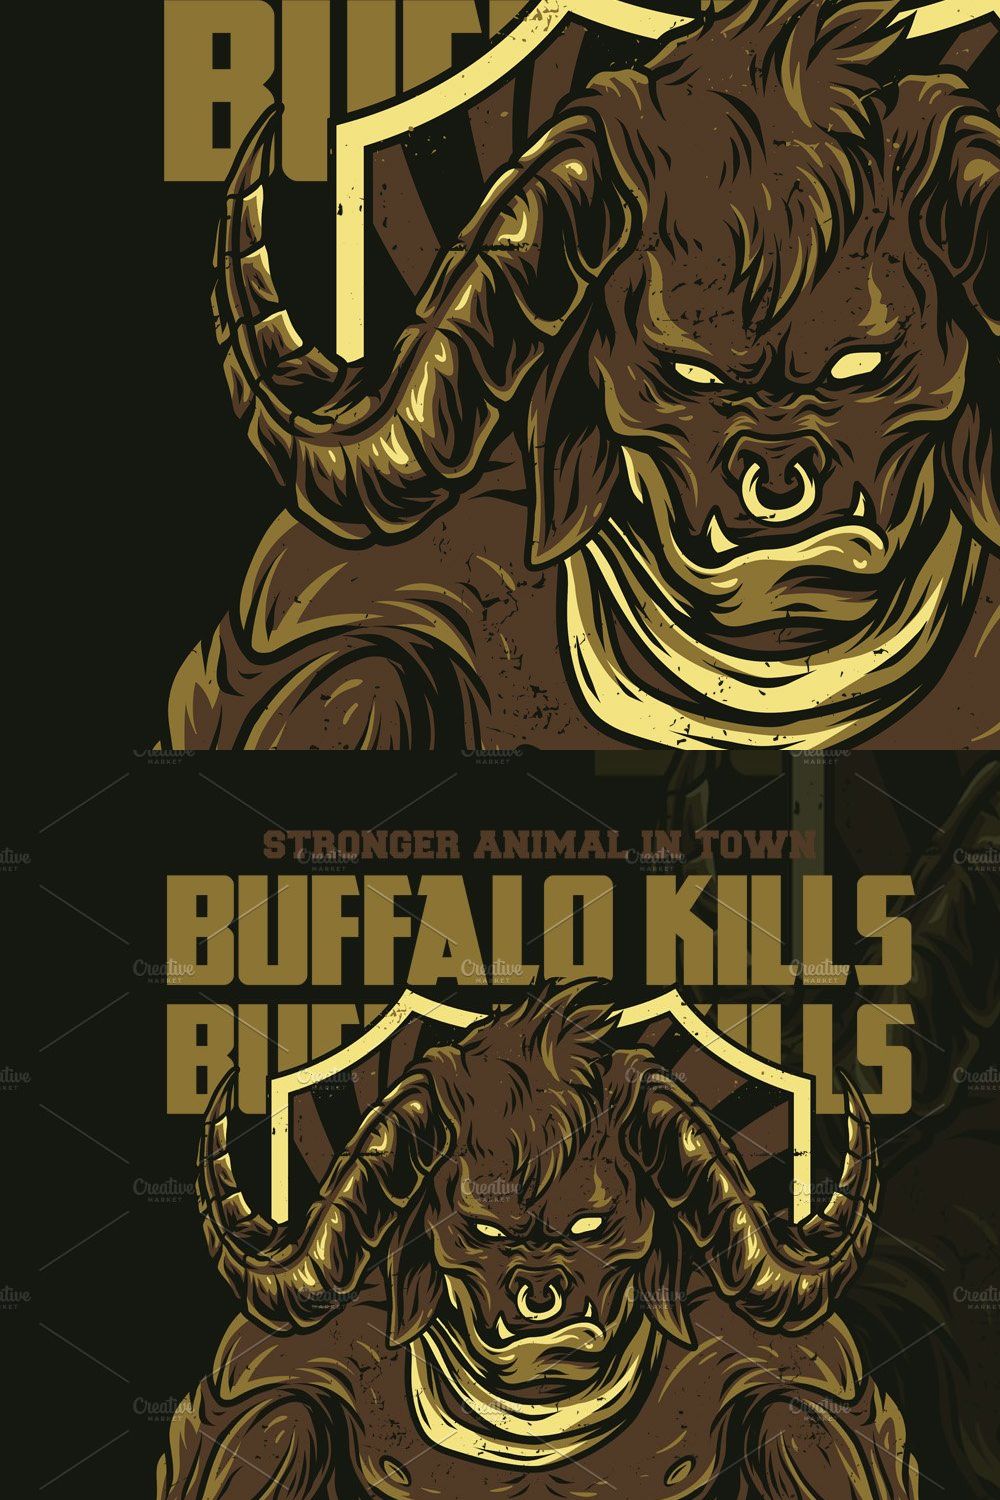 Buffalo Kills Illustration pinterest preview image.